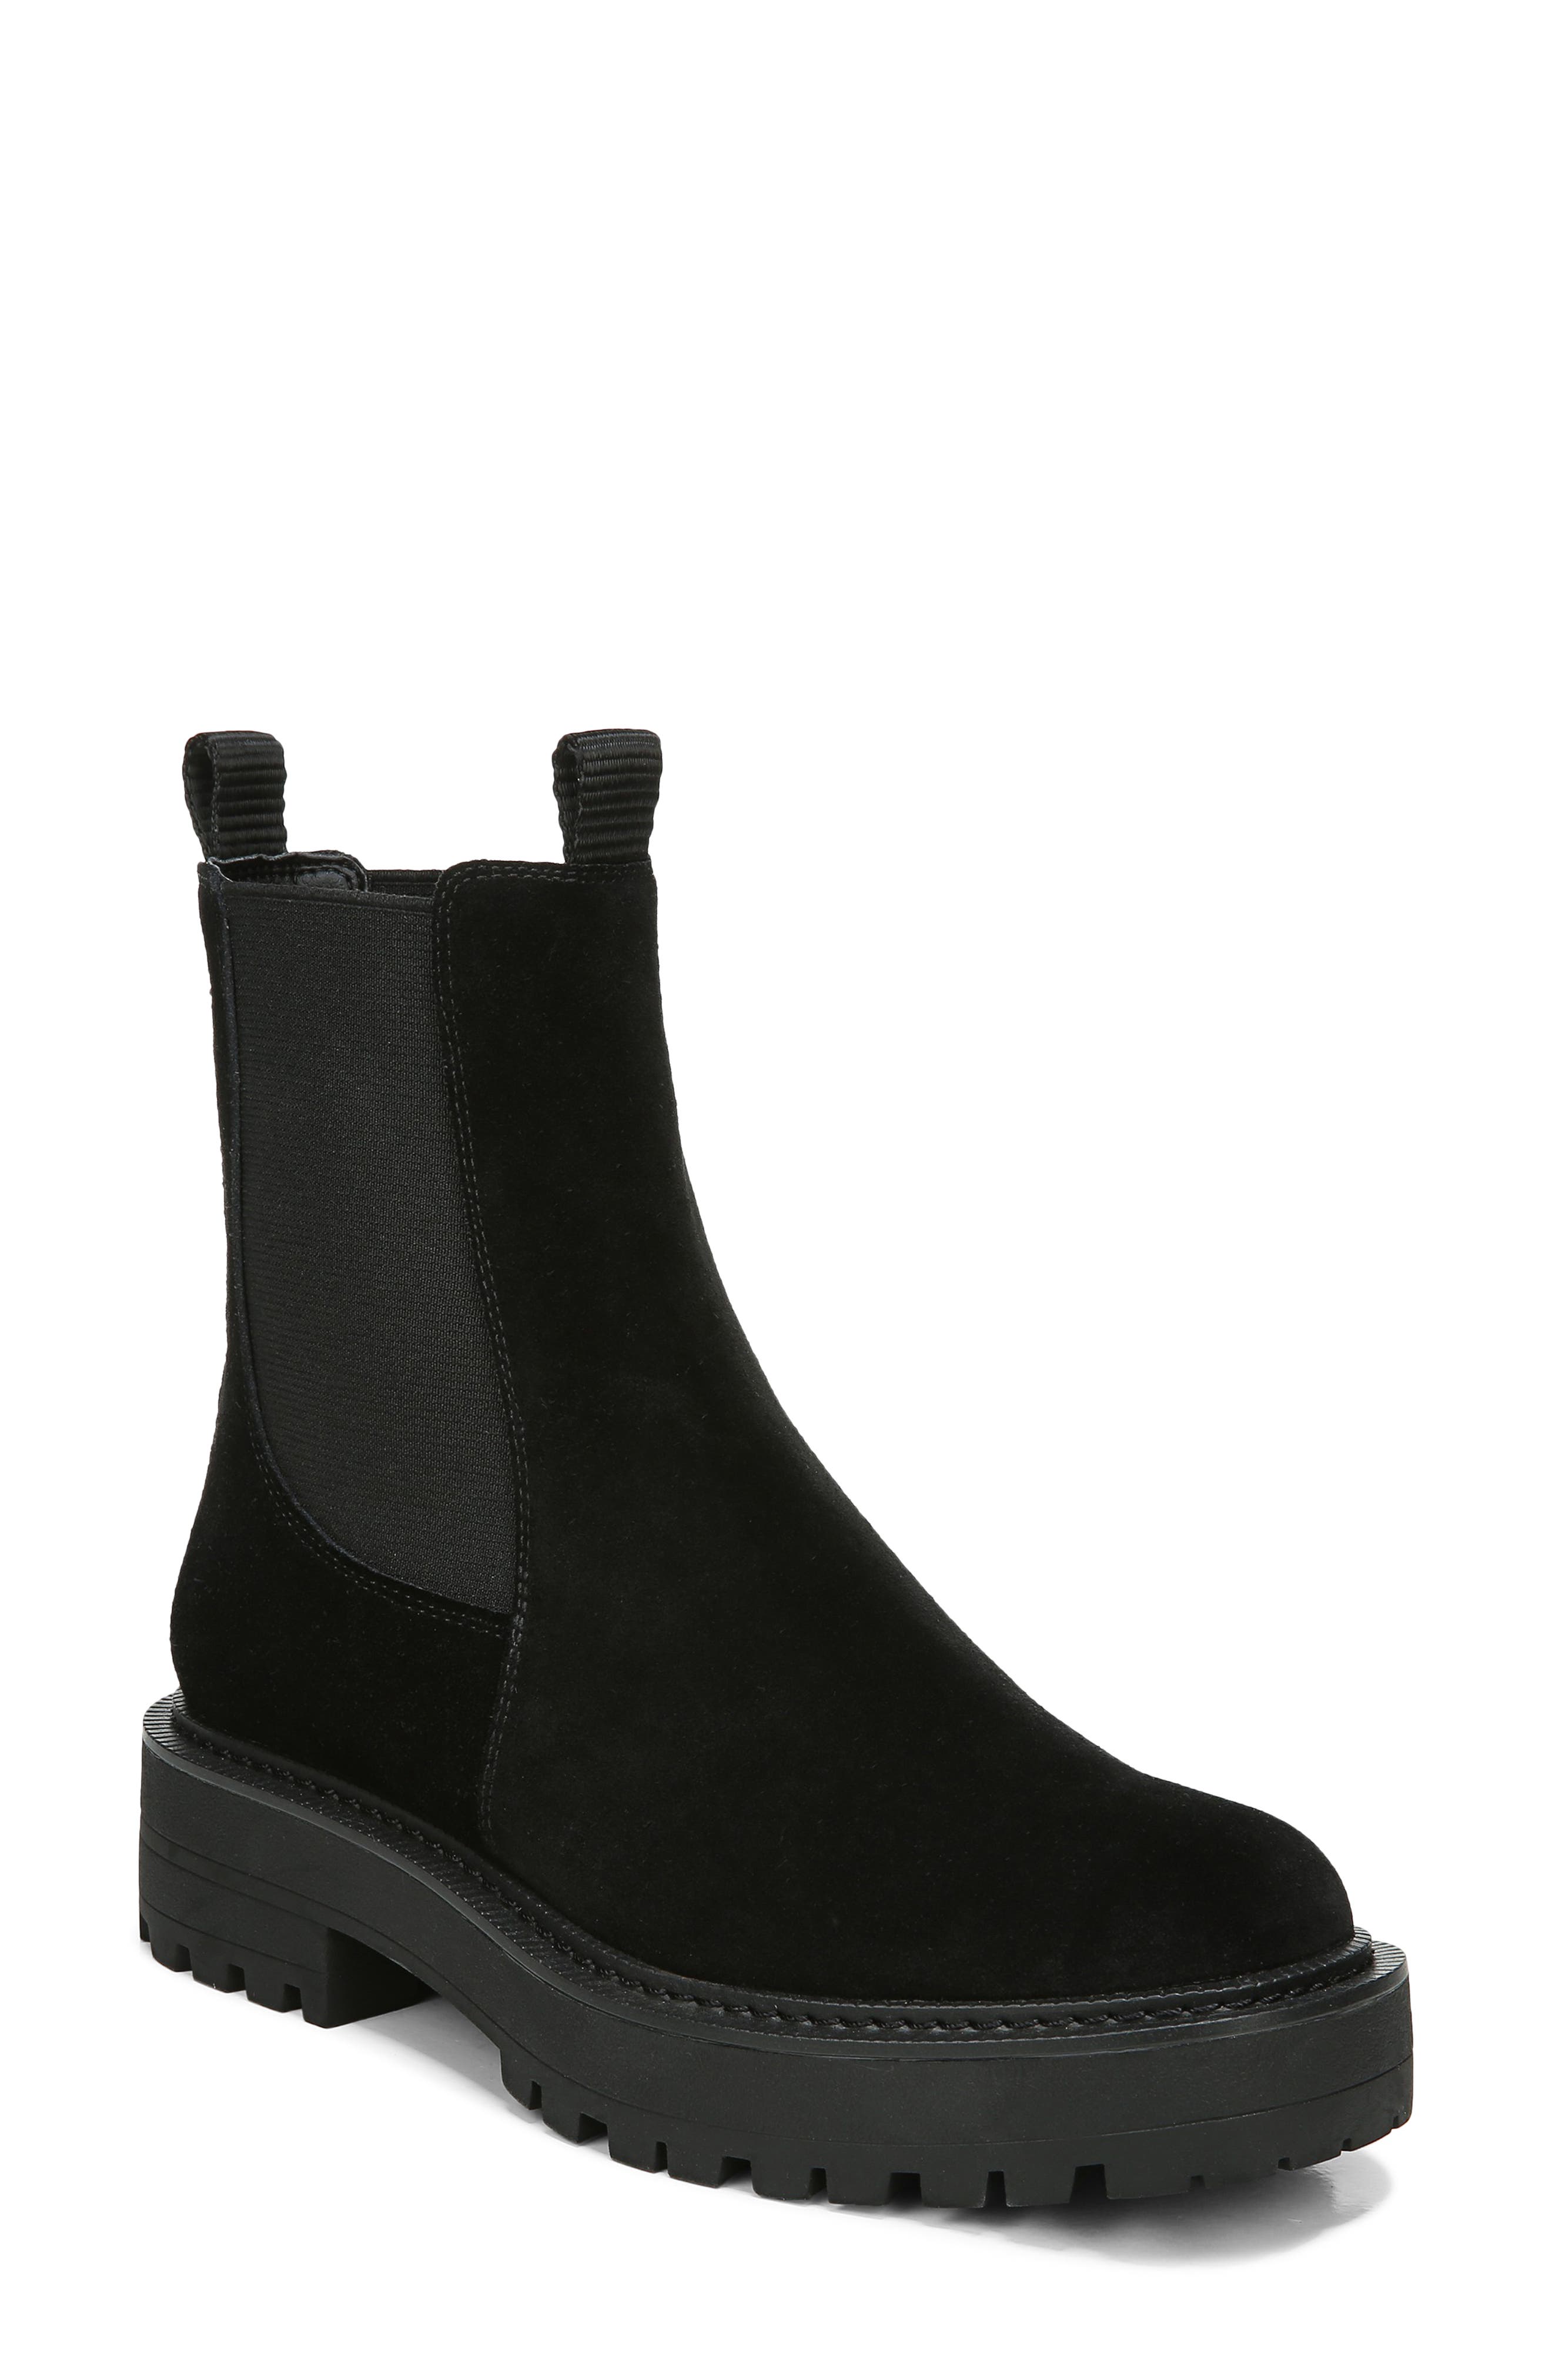 women's black boots on sale